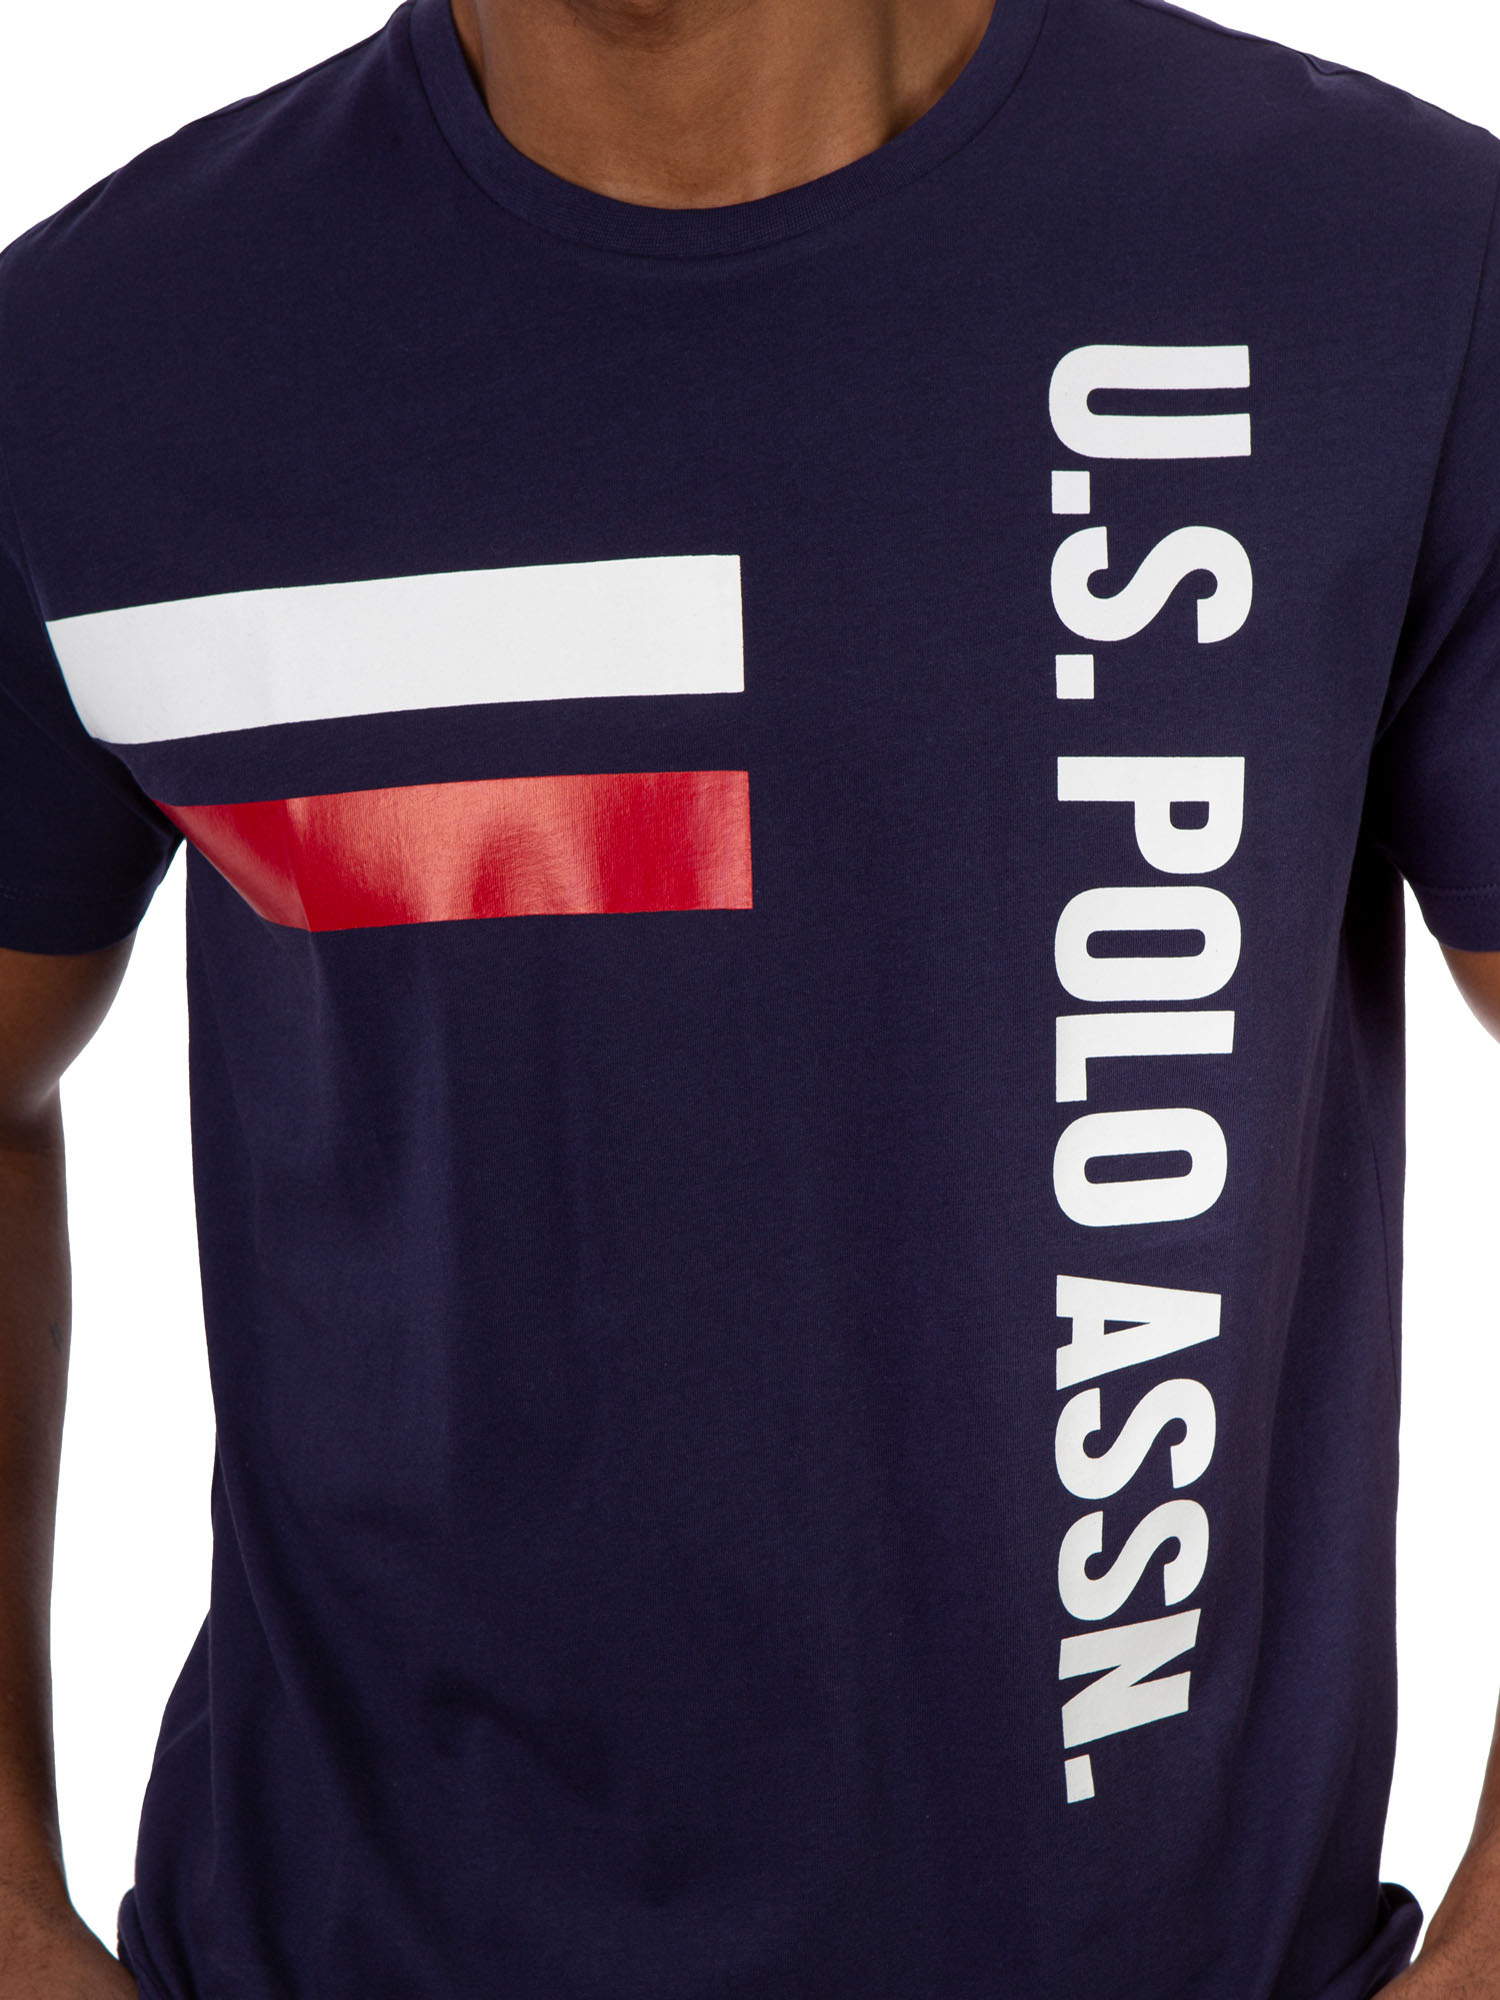 U.S. Polo Assn. Men's Short Sleeve Printed T-Shirt - image 5 of 5